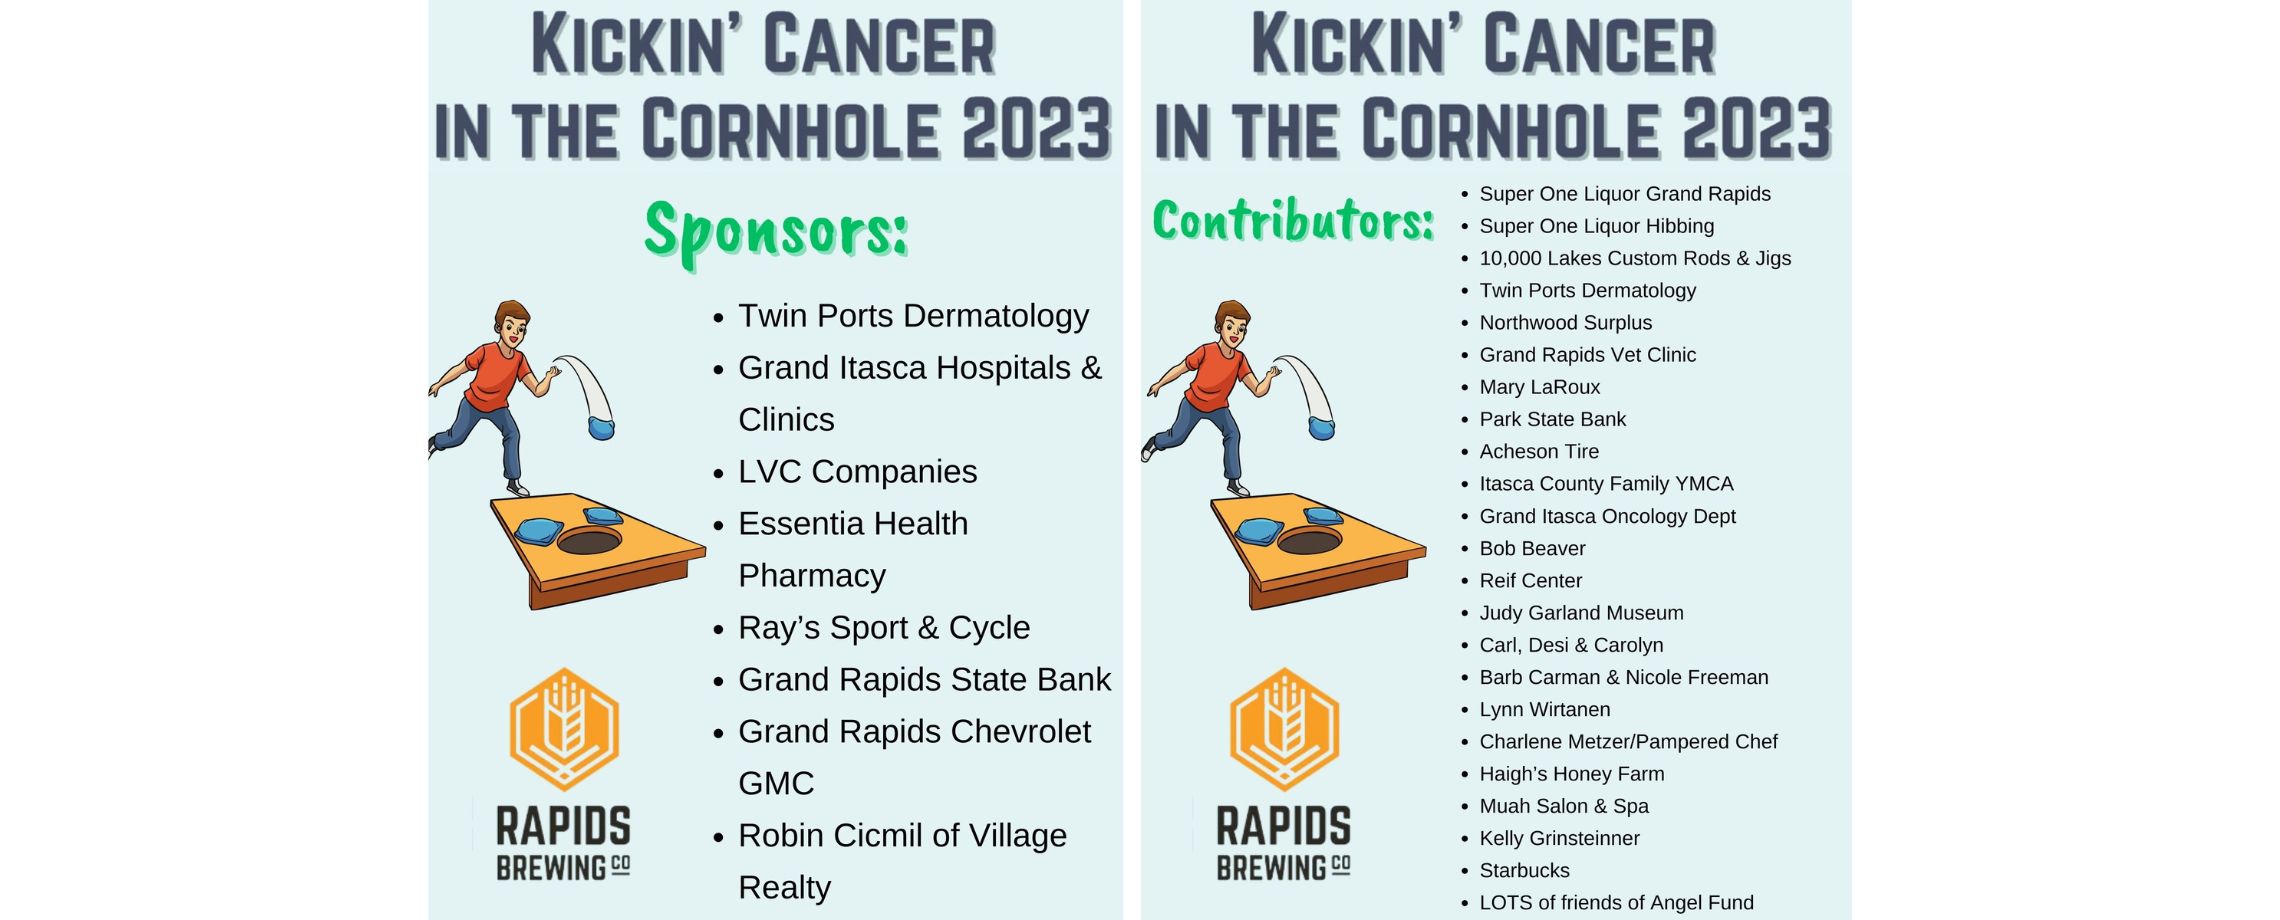 Kickin' Cancer in the Cornhole 2023         Sponsors & Contributors